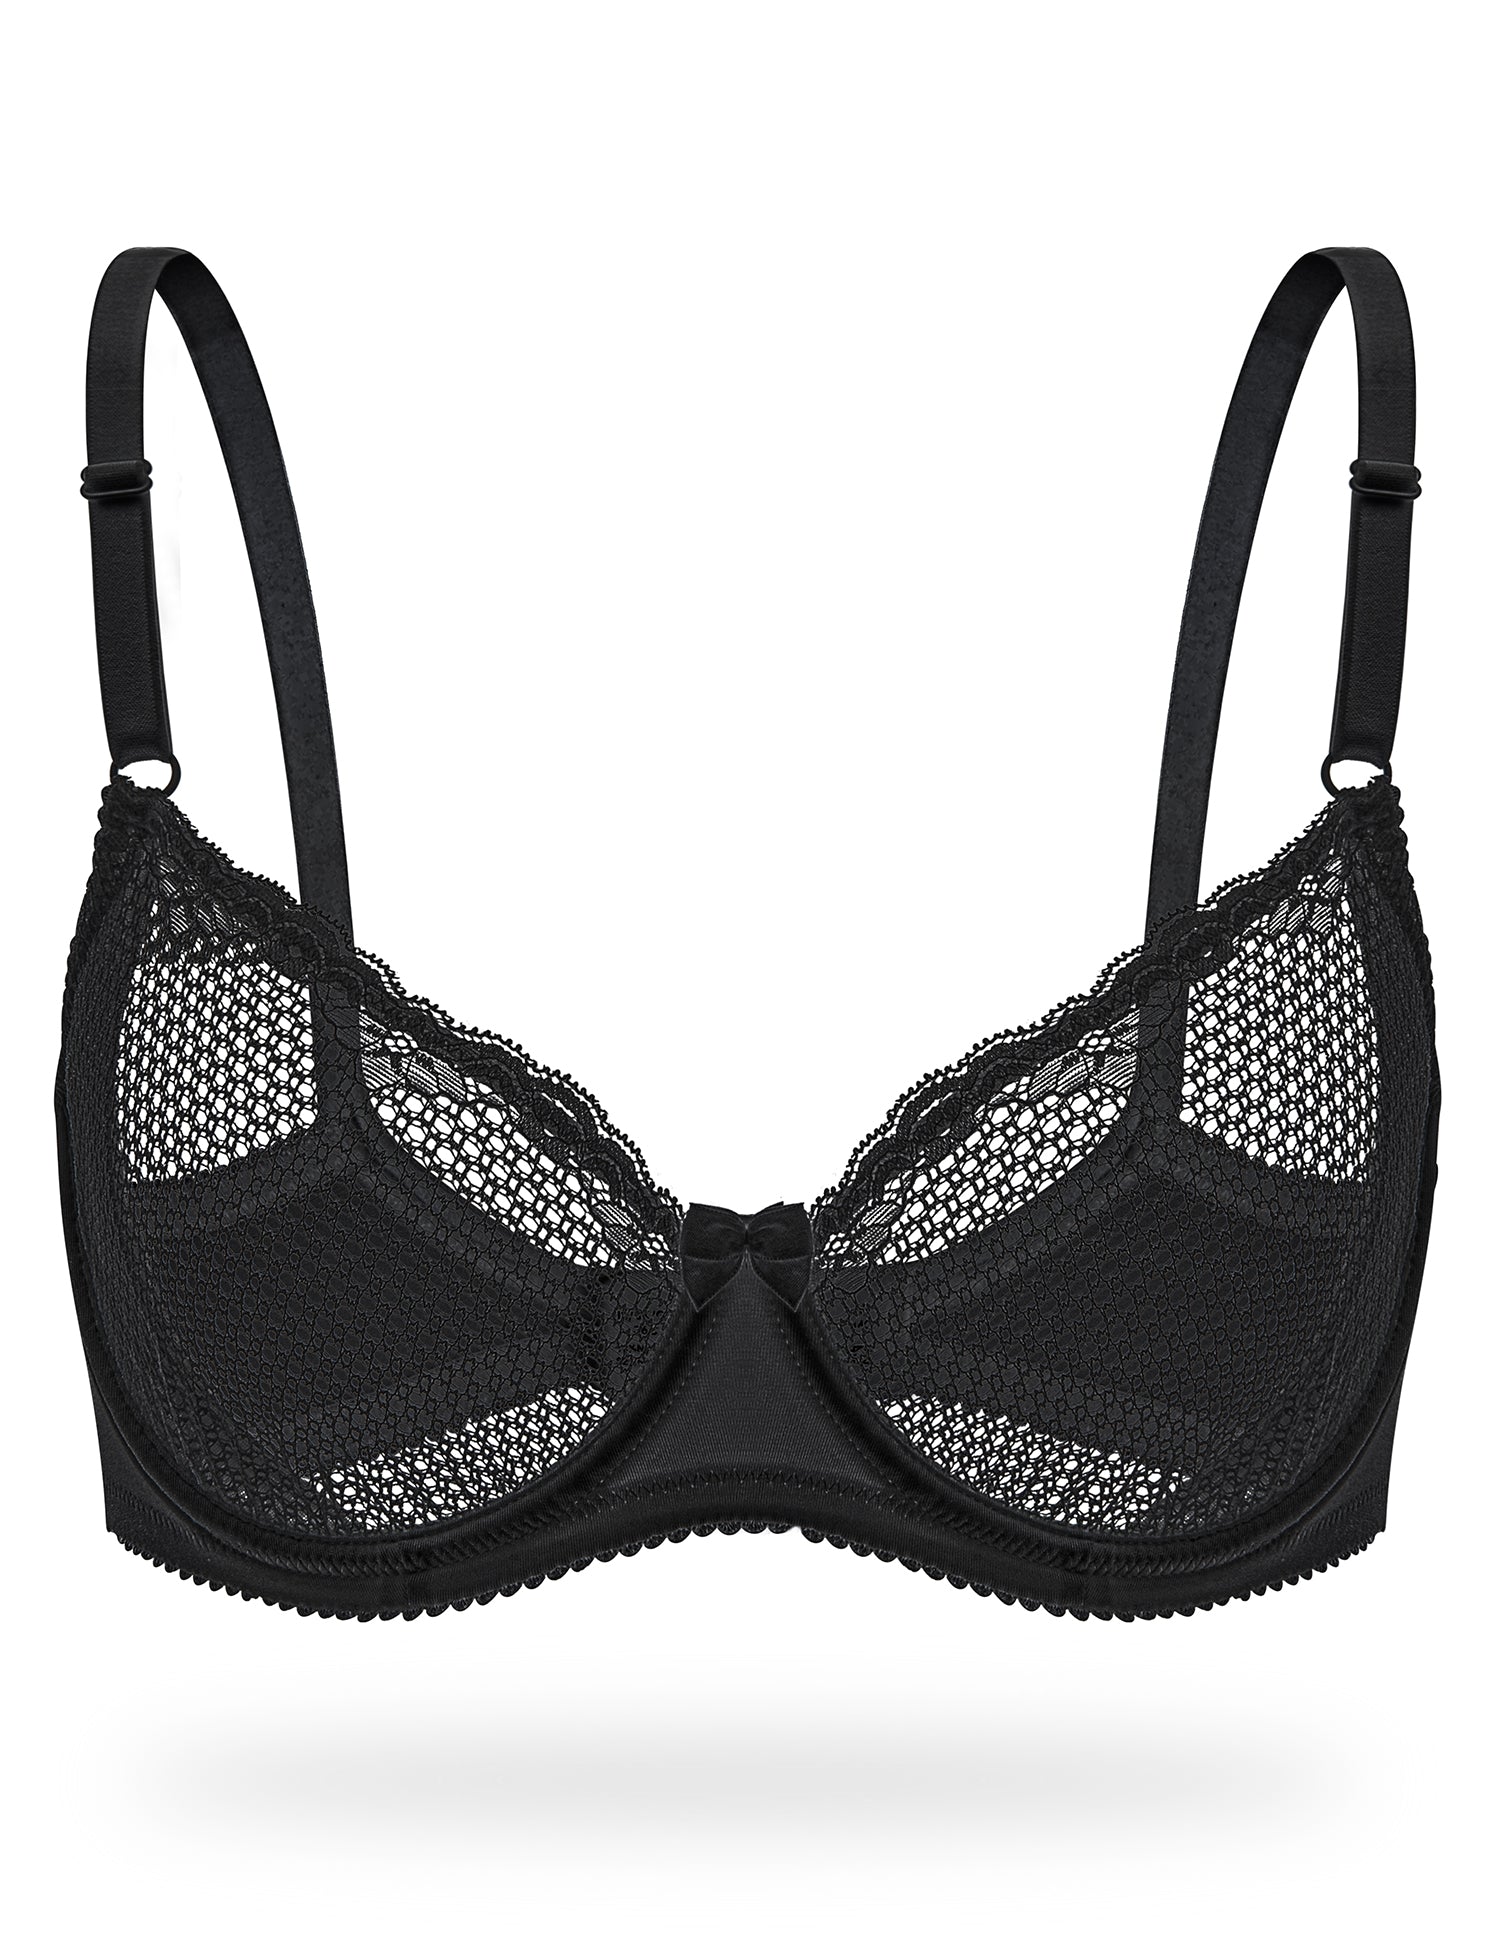 See-through bra - Transparent black lace bra with strap - Sheer bra